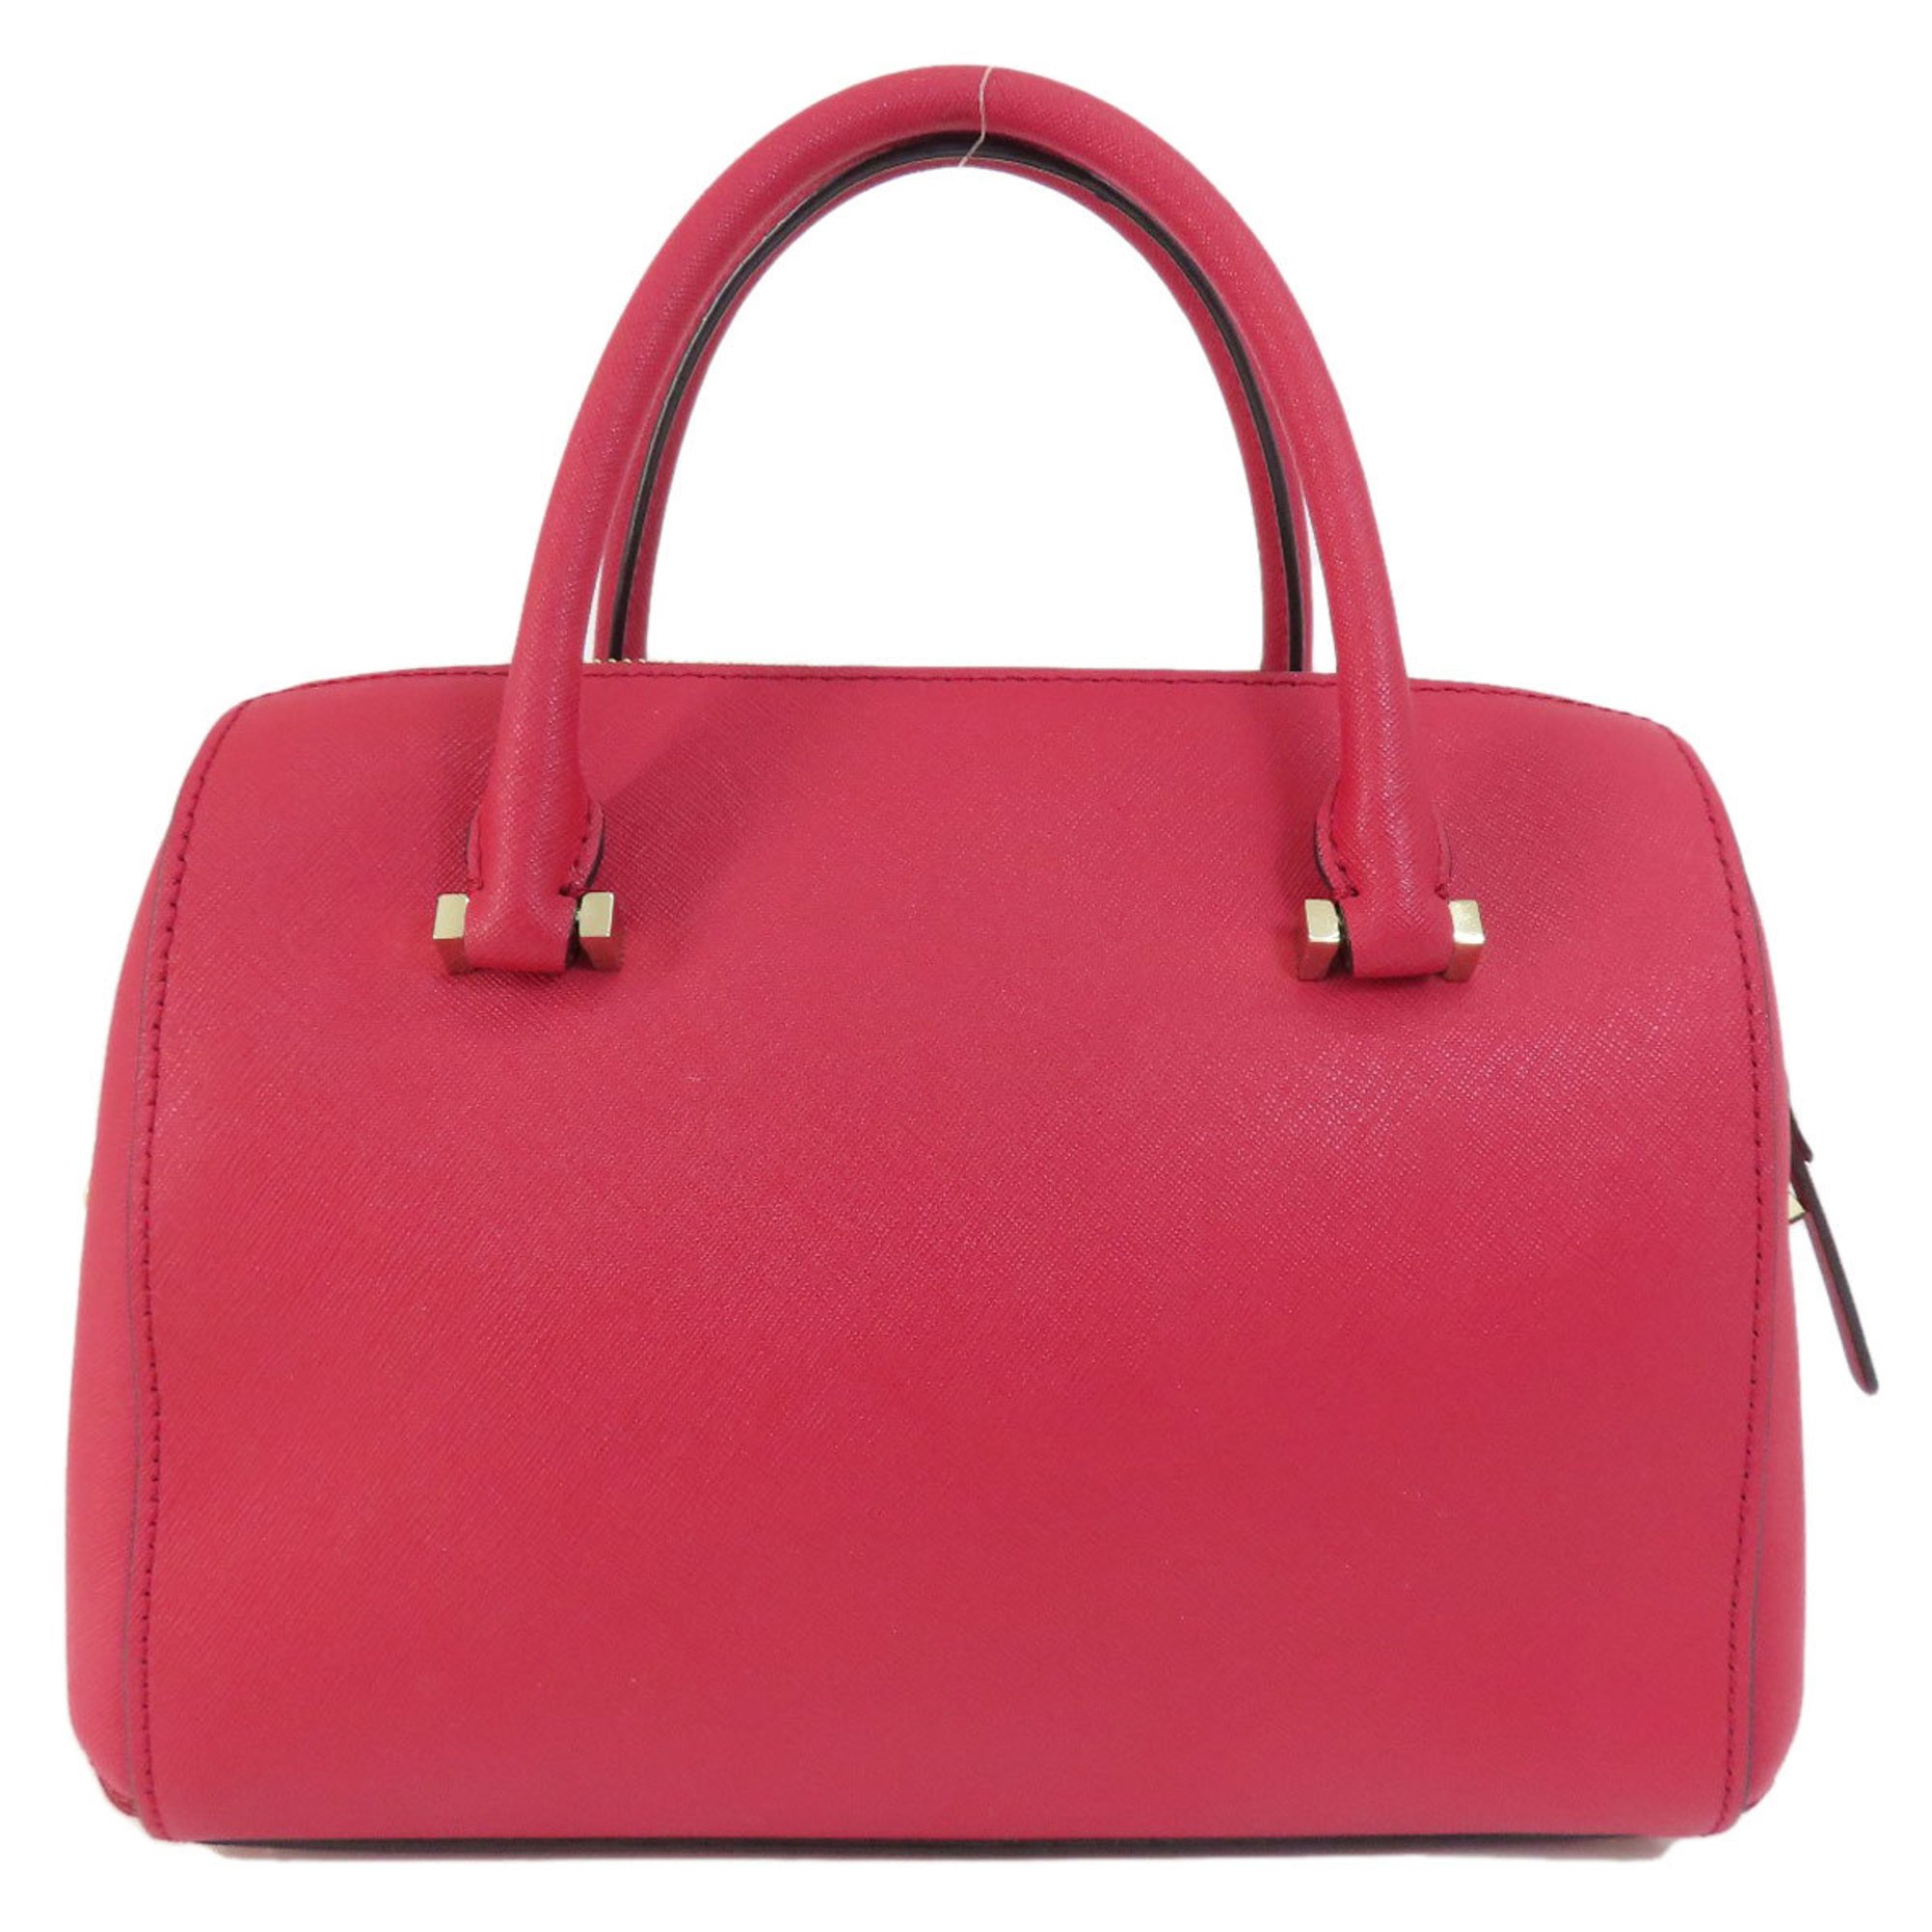 Kate Spade metal fittings handbags for women